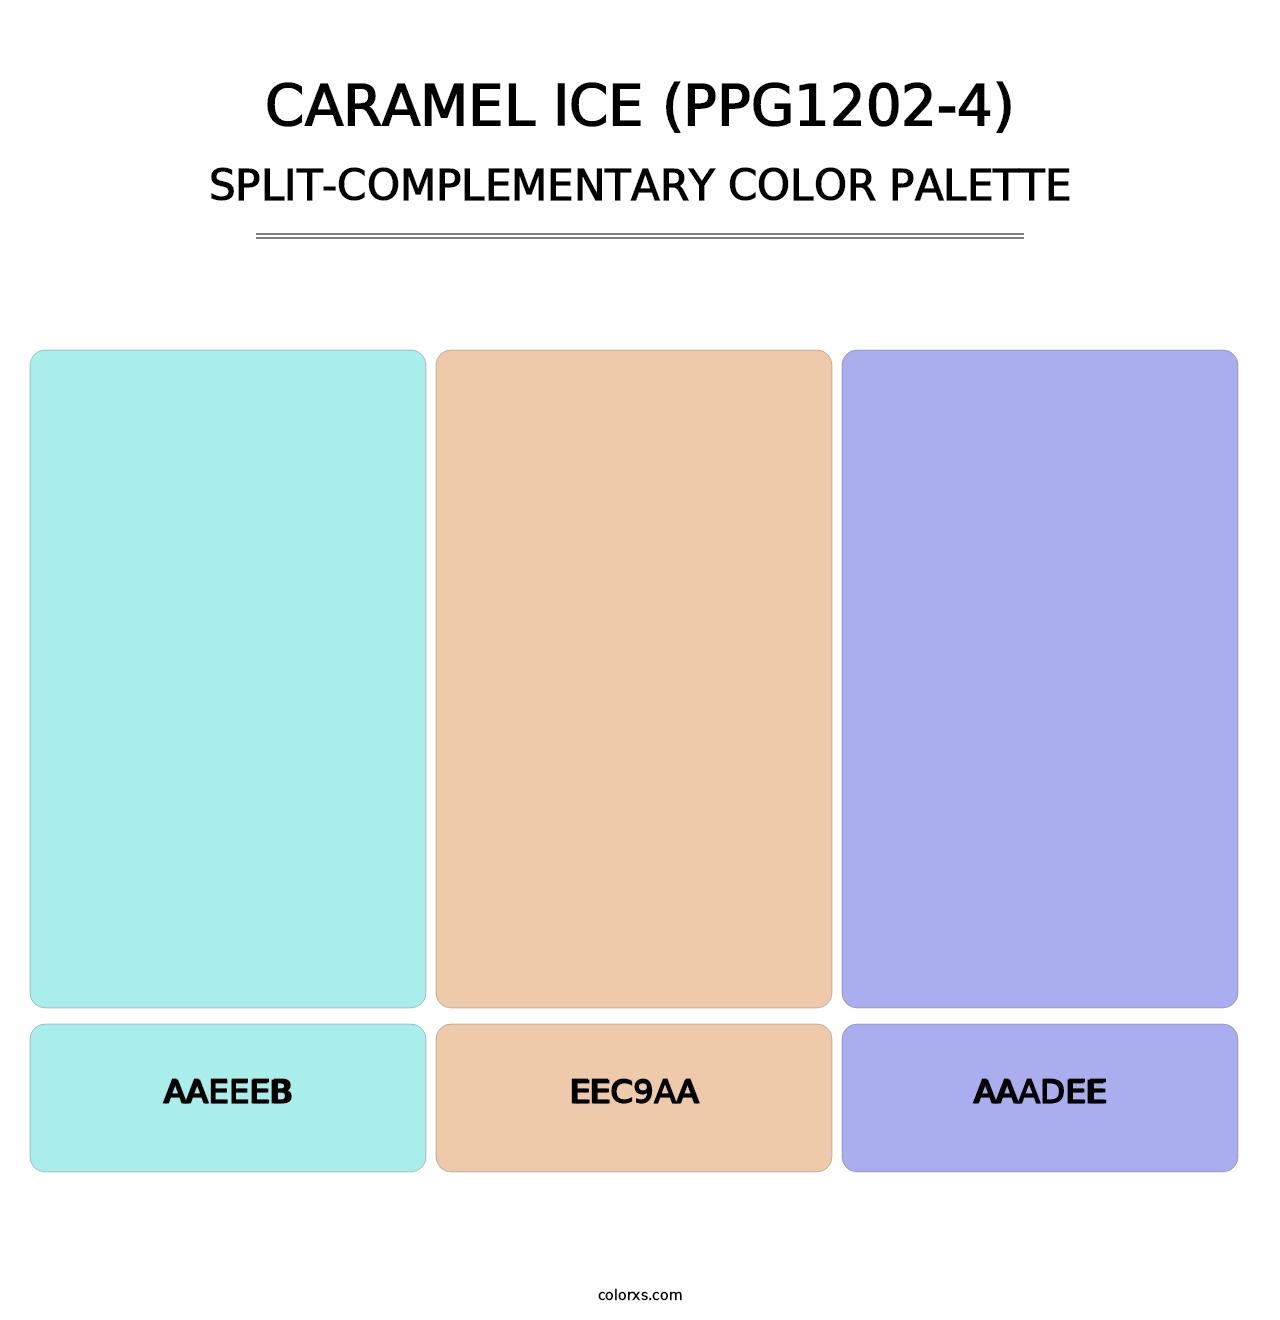 Caramel Ice (PPG1202-4) - Split-Complementary Color Palette